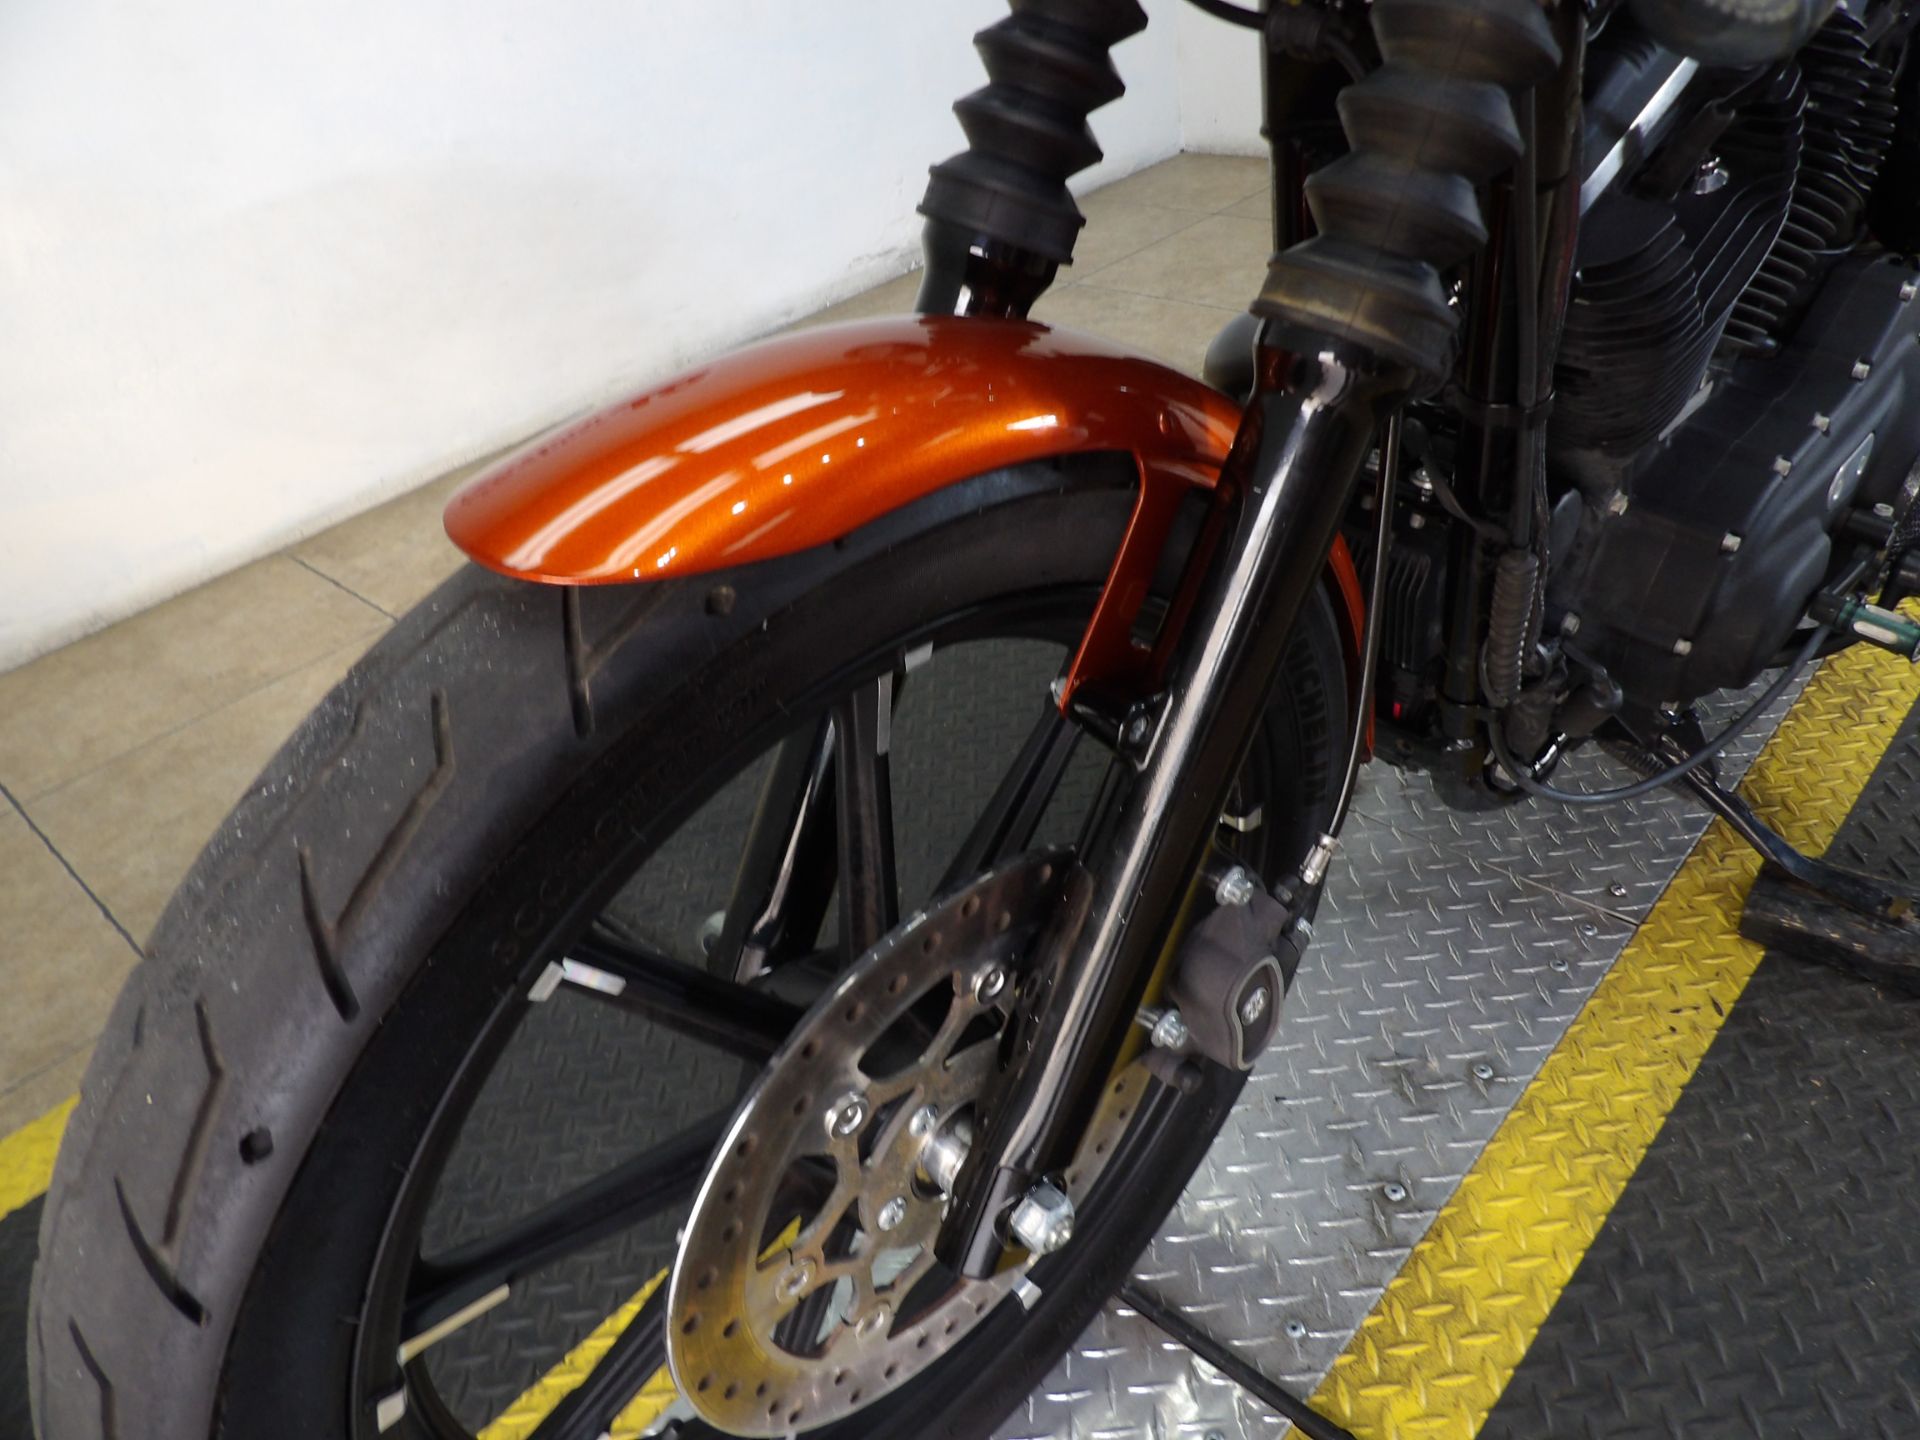 2020 Harley-Davidson Iron 883™ in Temecula, California - Photo 20